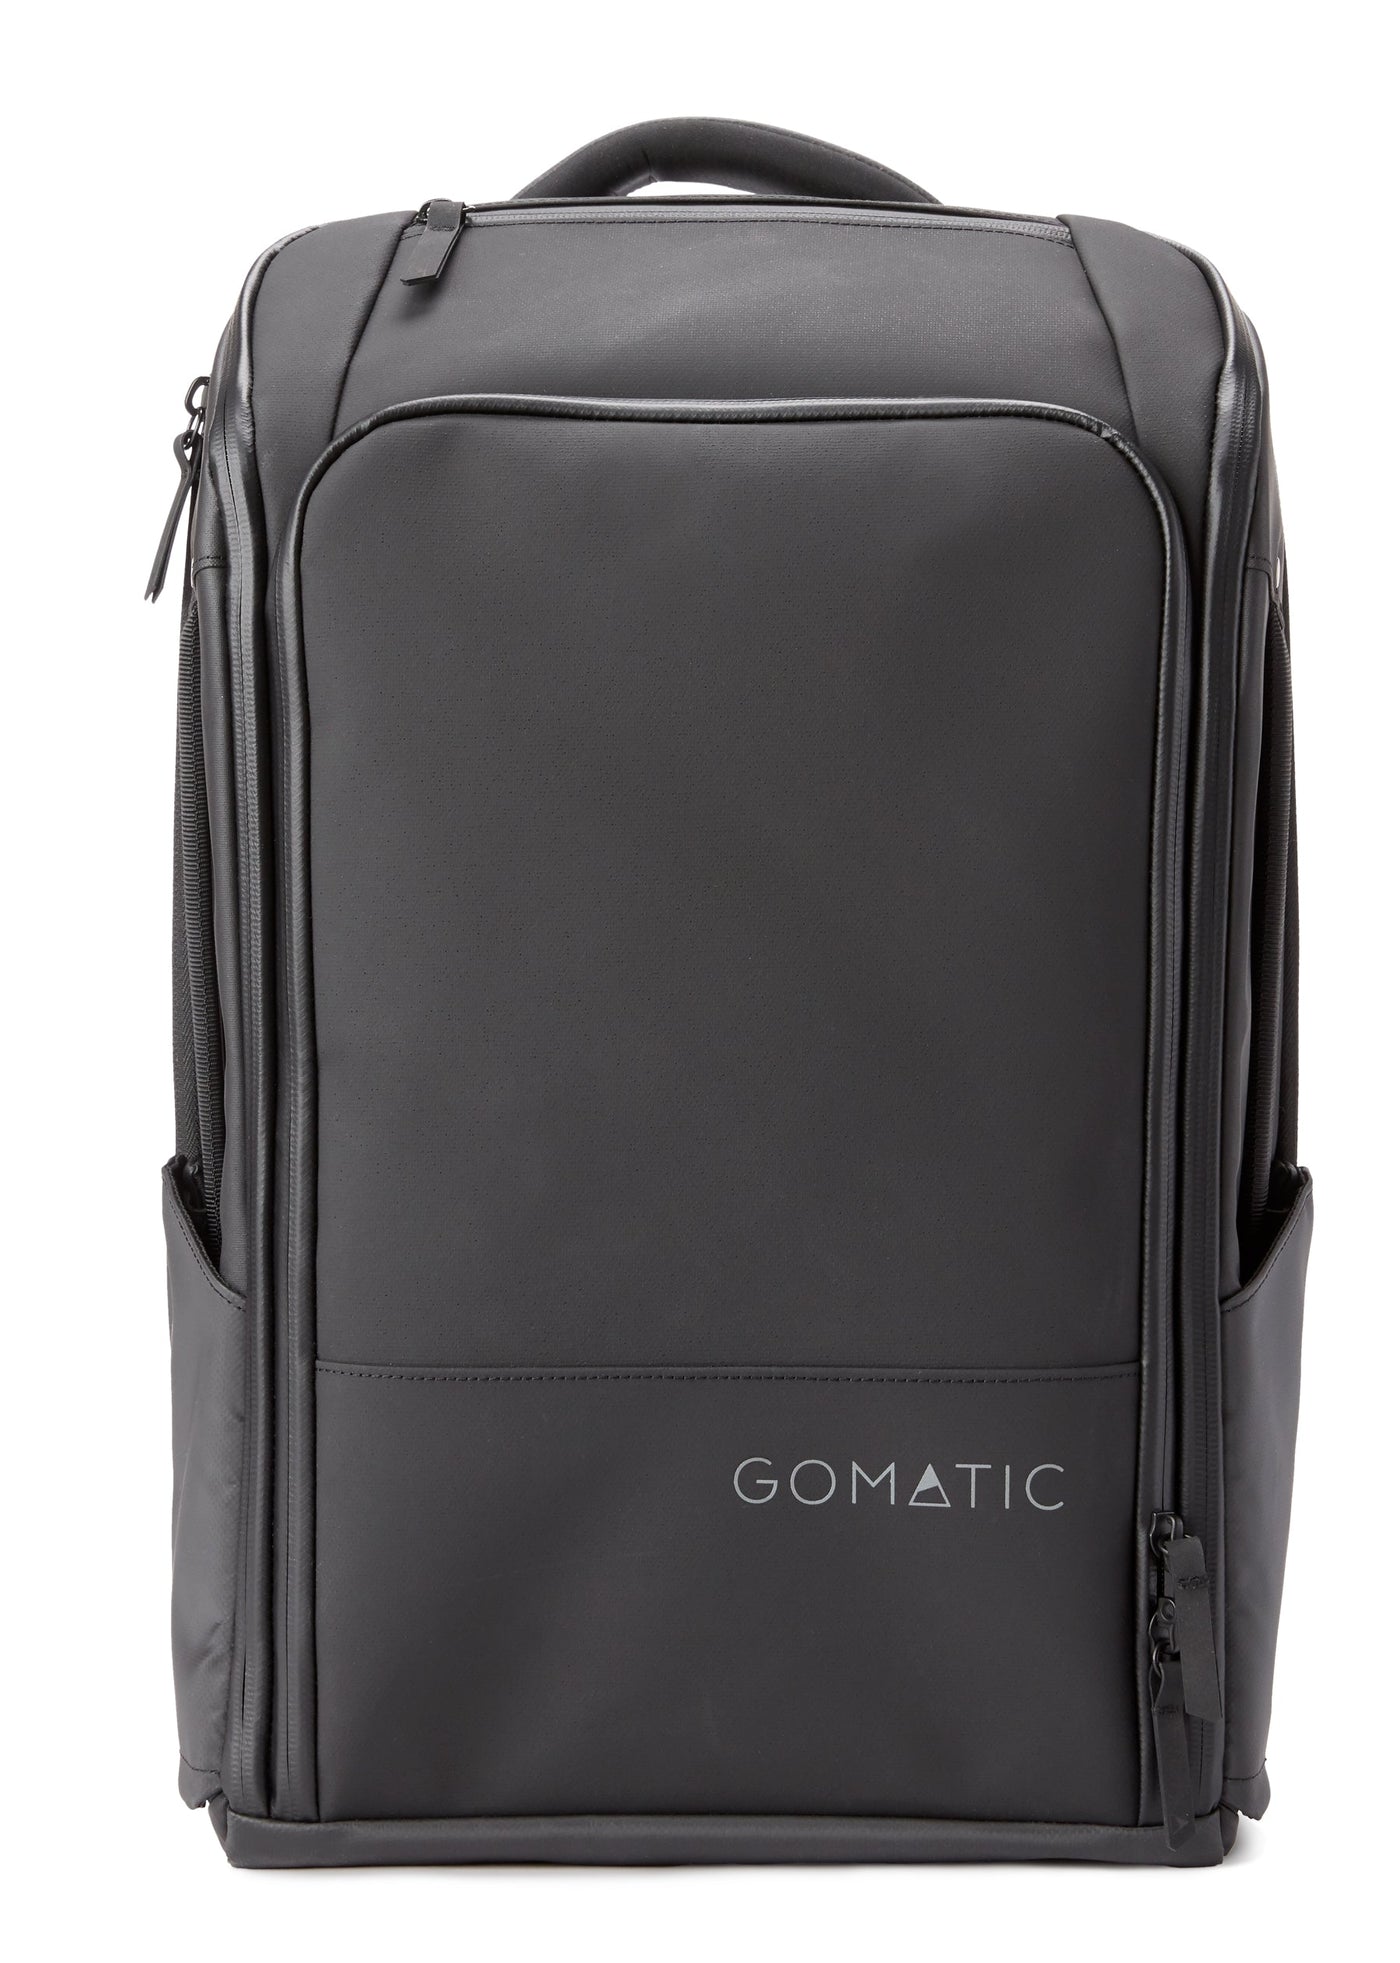 Backpack - NOMATIC Travel Bags Packs